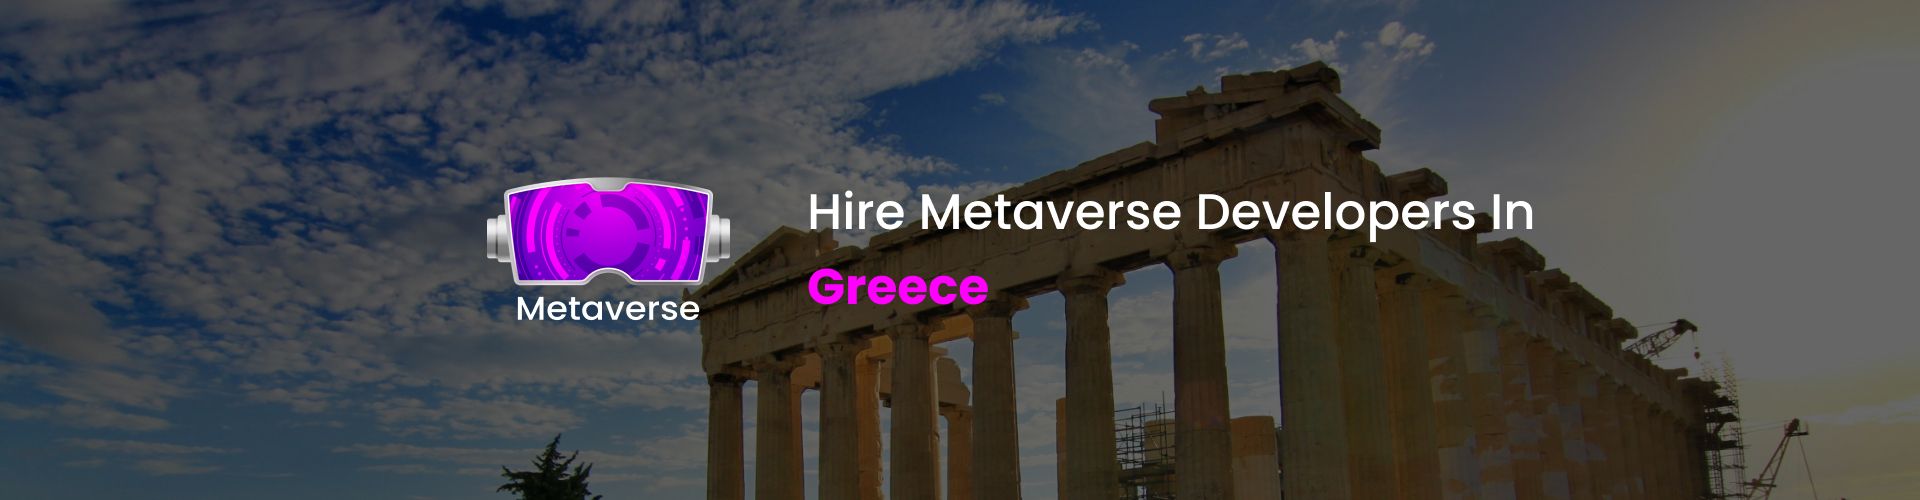 metaverse developers in greece